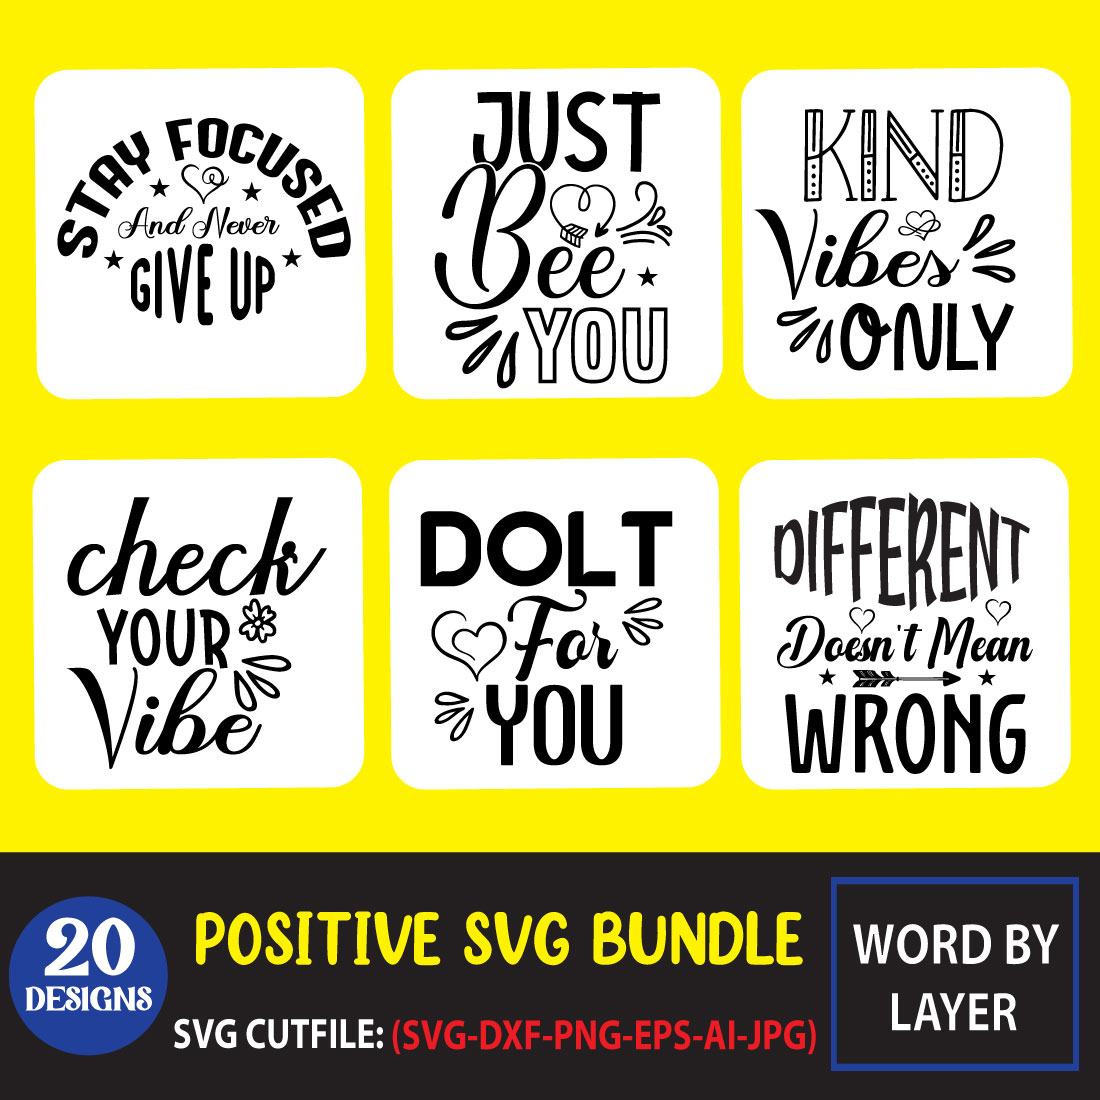 Positive SVG Bundle cover.